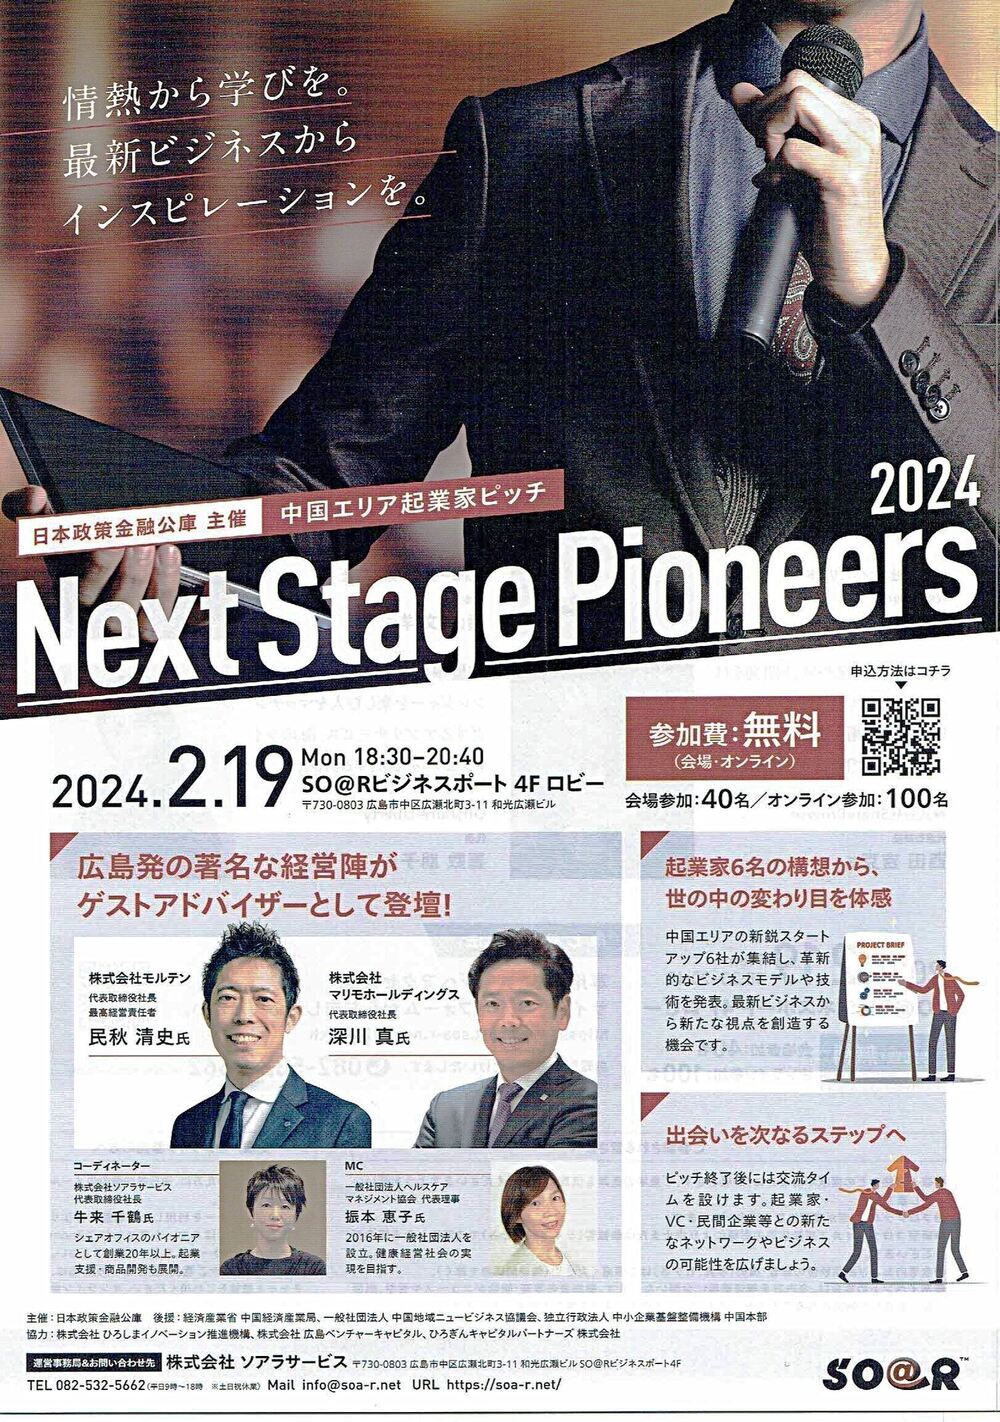 Next Stage Pioneers 2024